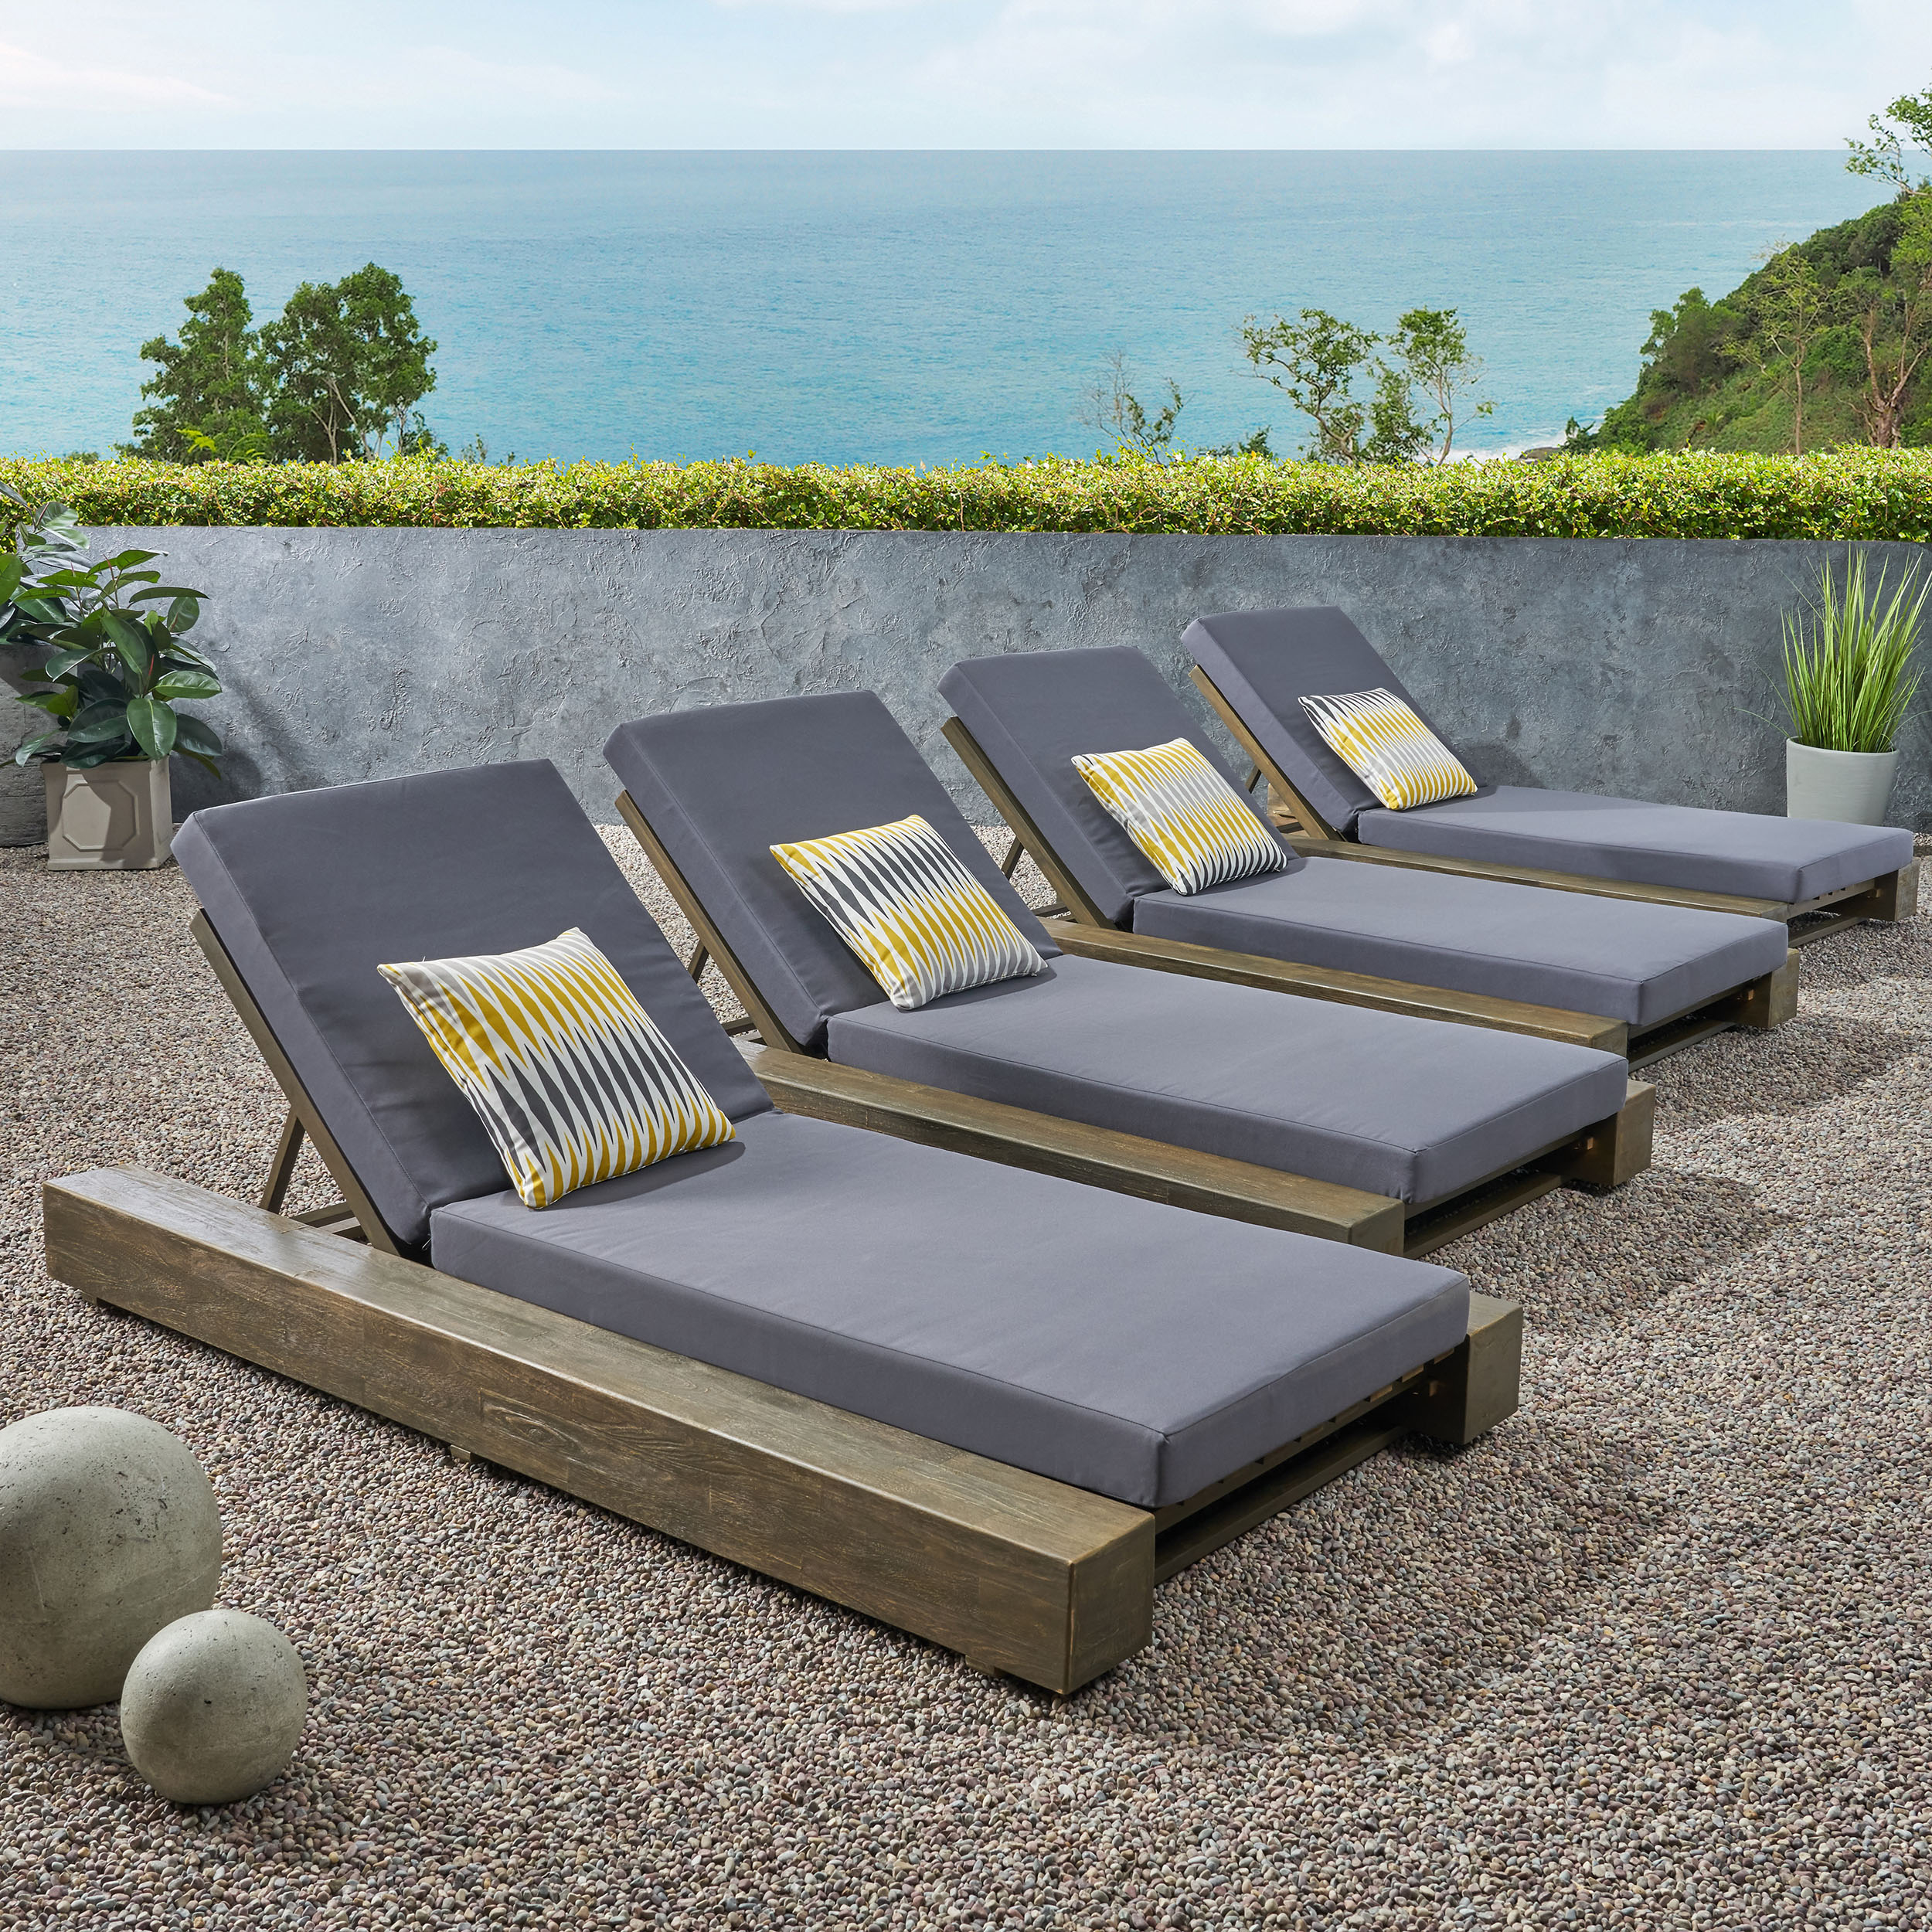 Setlla Outdoor Acacia Wood Chaise Lounge And Cushion Sets (Set Of 4) - Sandblast Gray Finish, Dark Gray